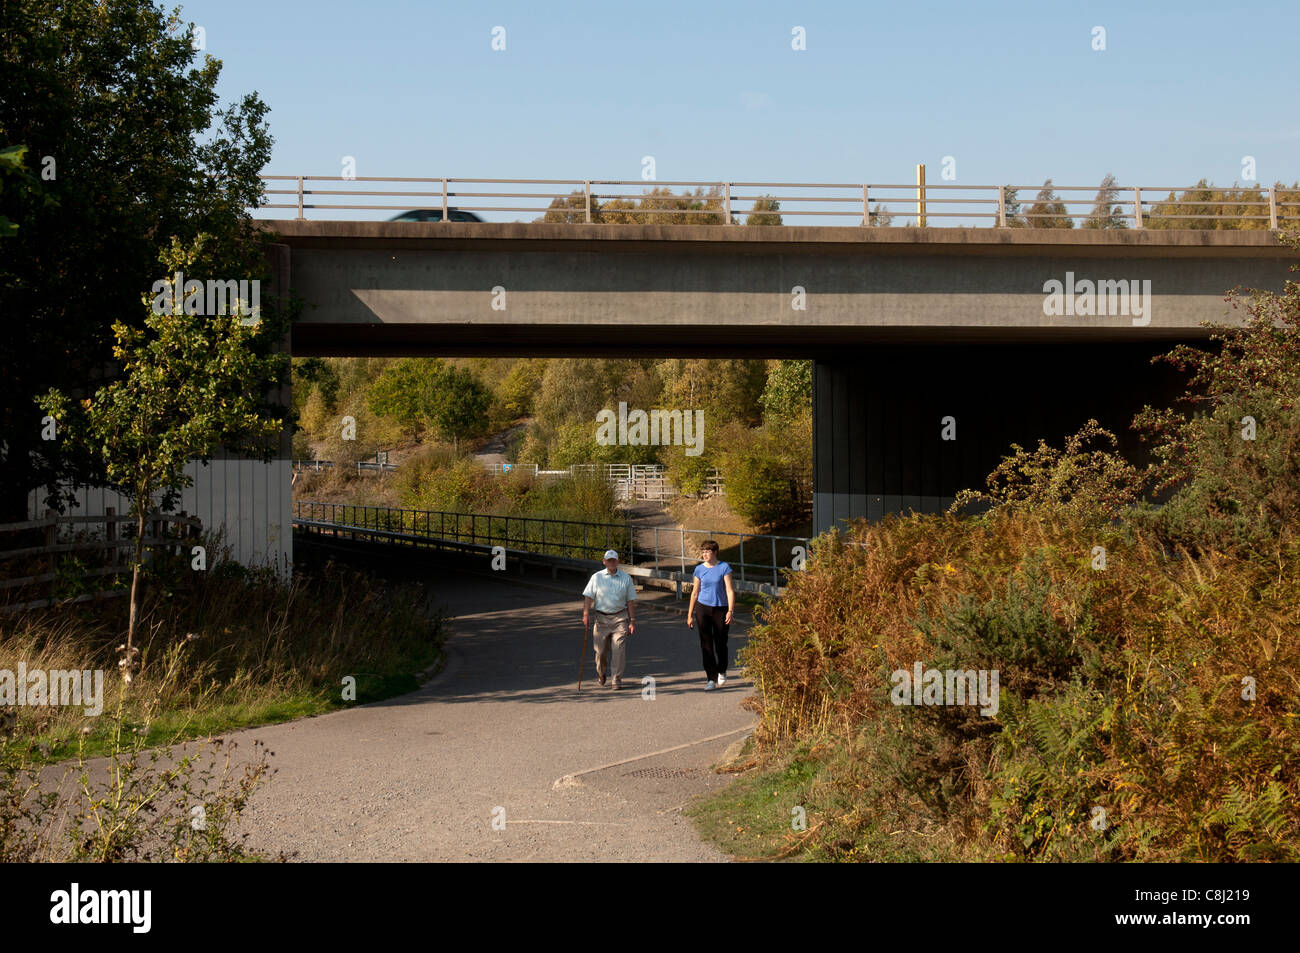 Pooley Country Park and M42 motorway bridge, Warwickshire, UK Stock Photo